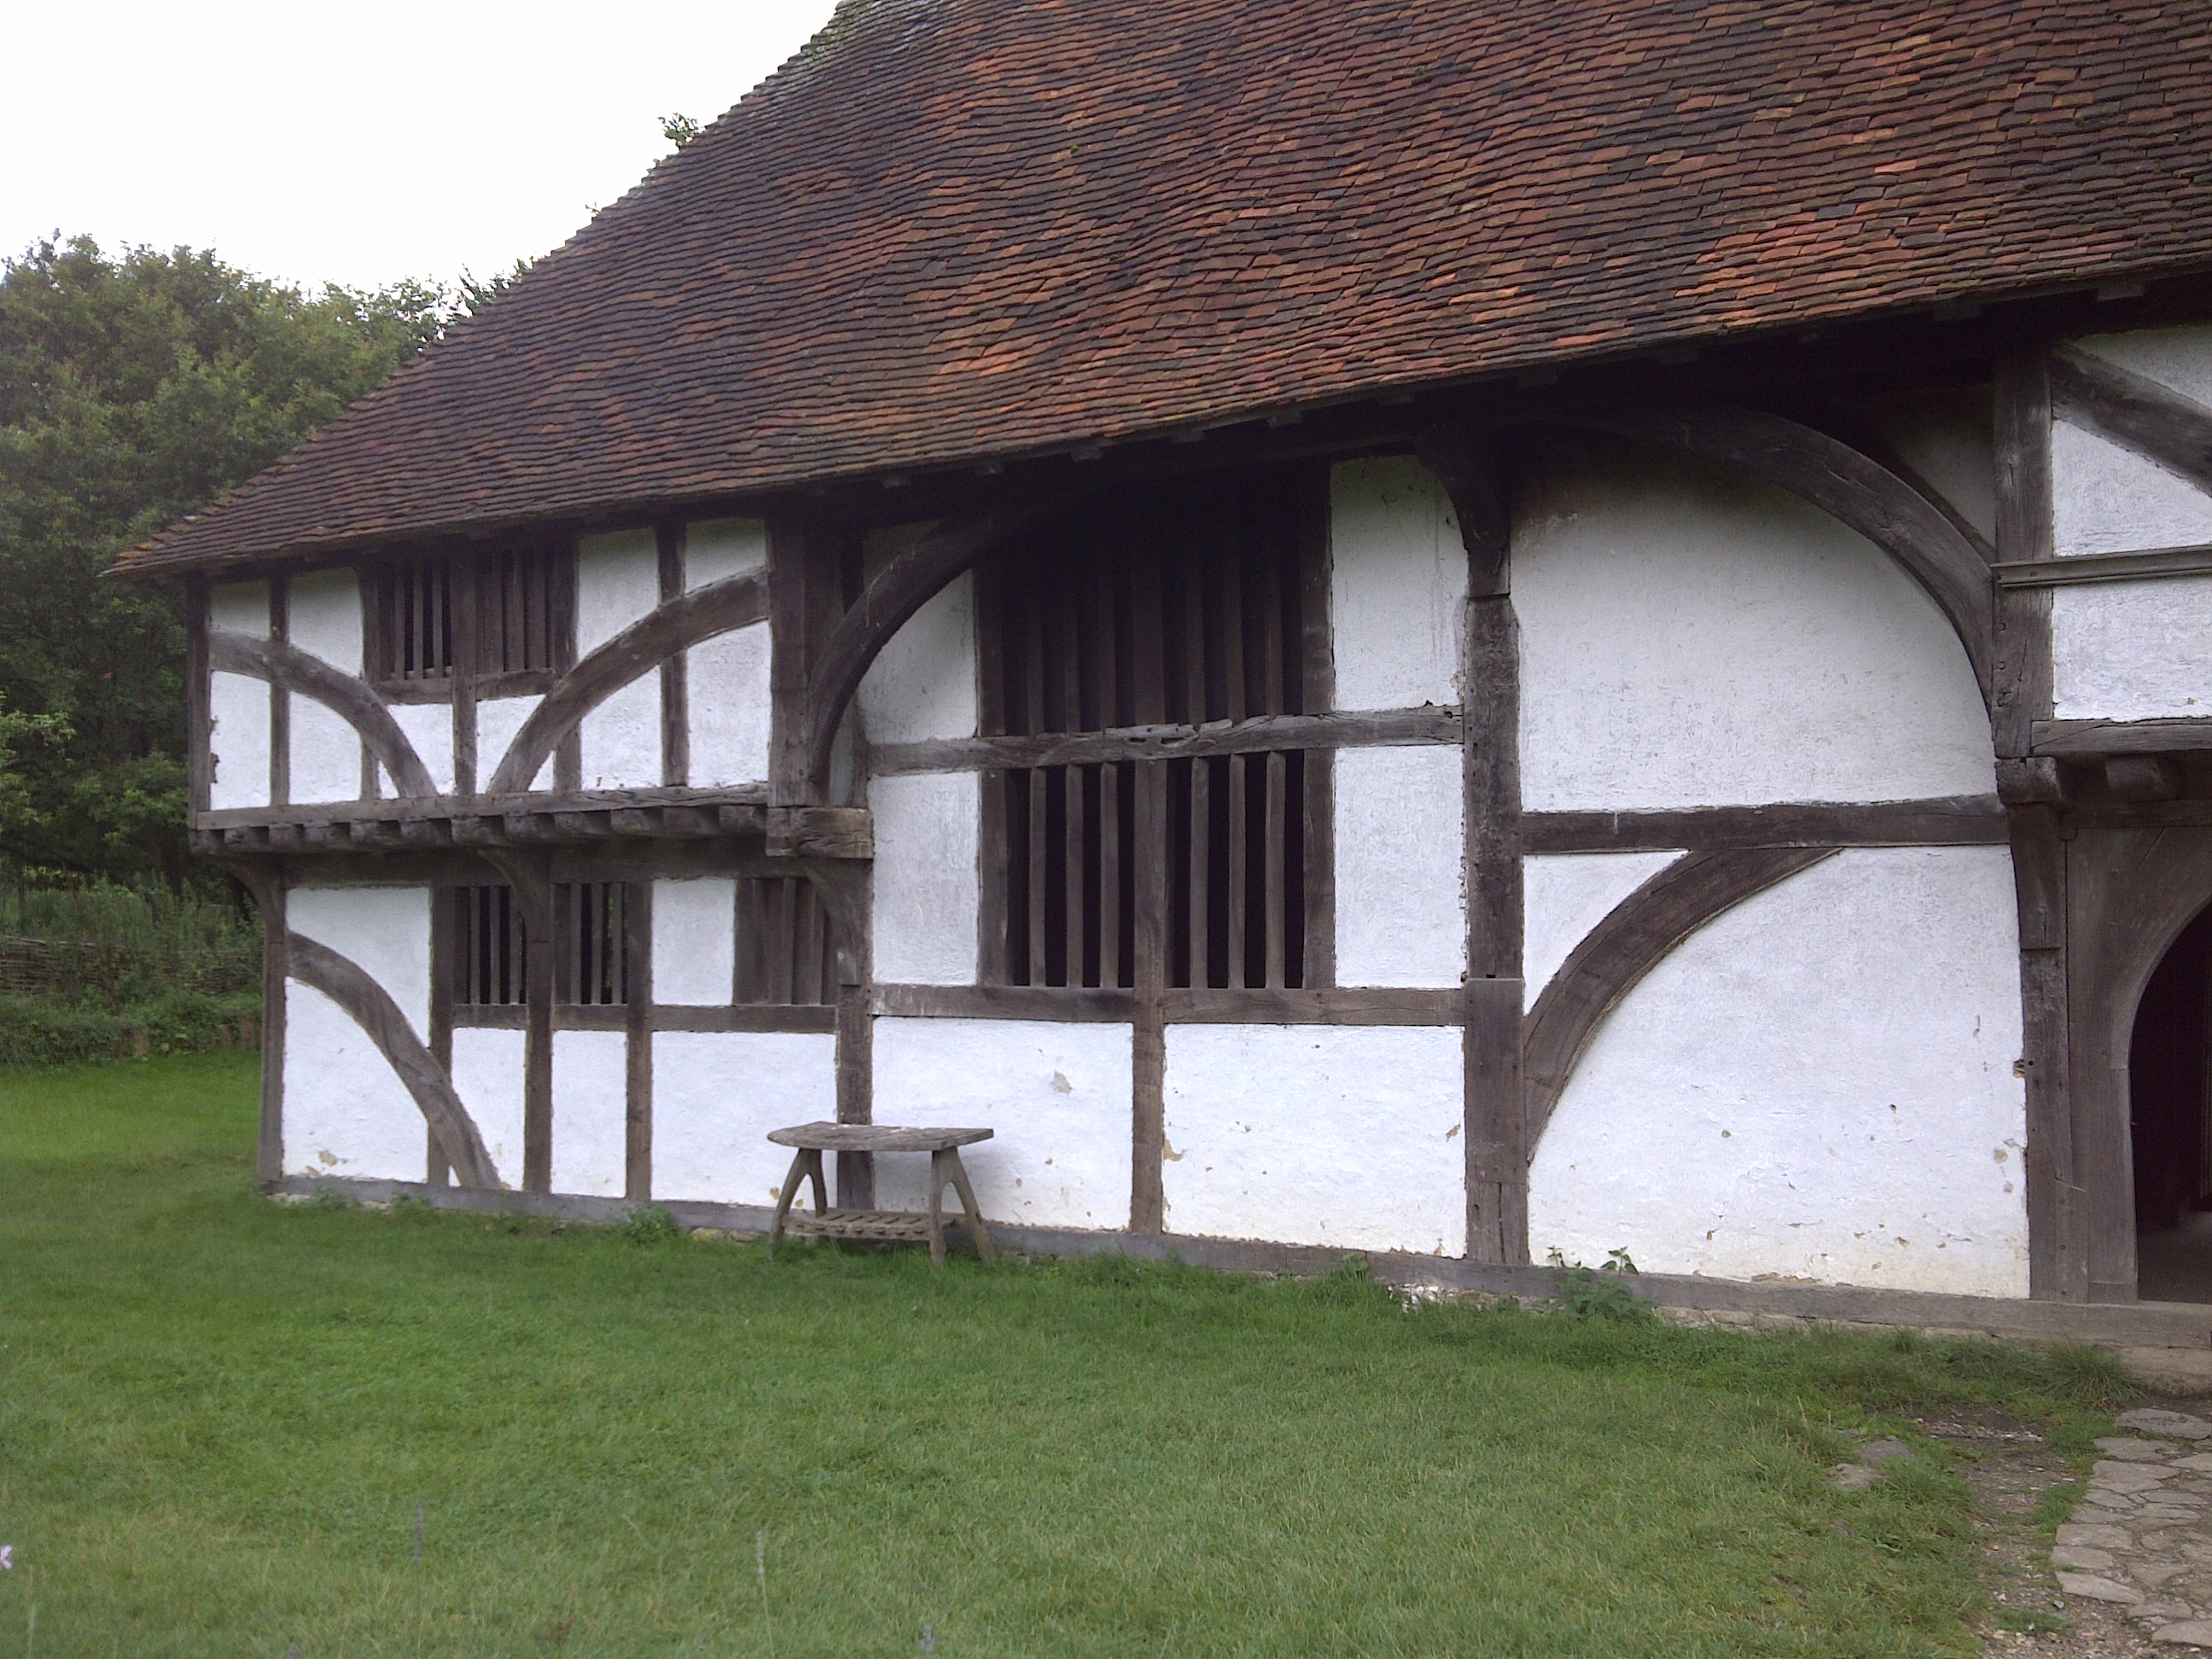 Wealden House from Chiddingstone, Kent